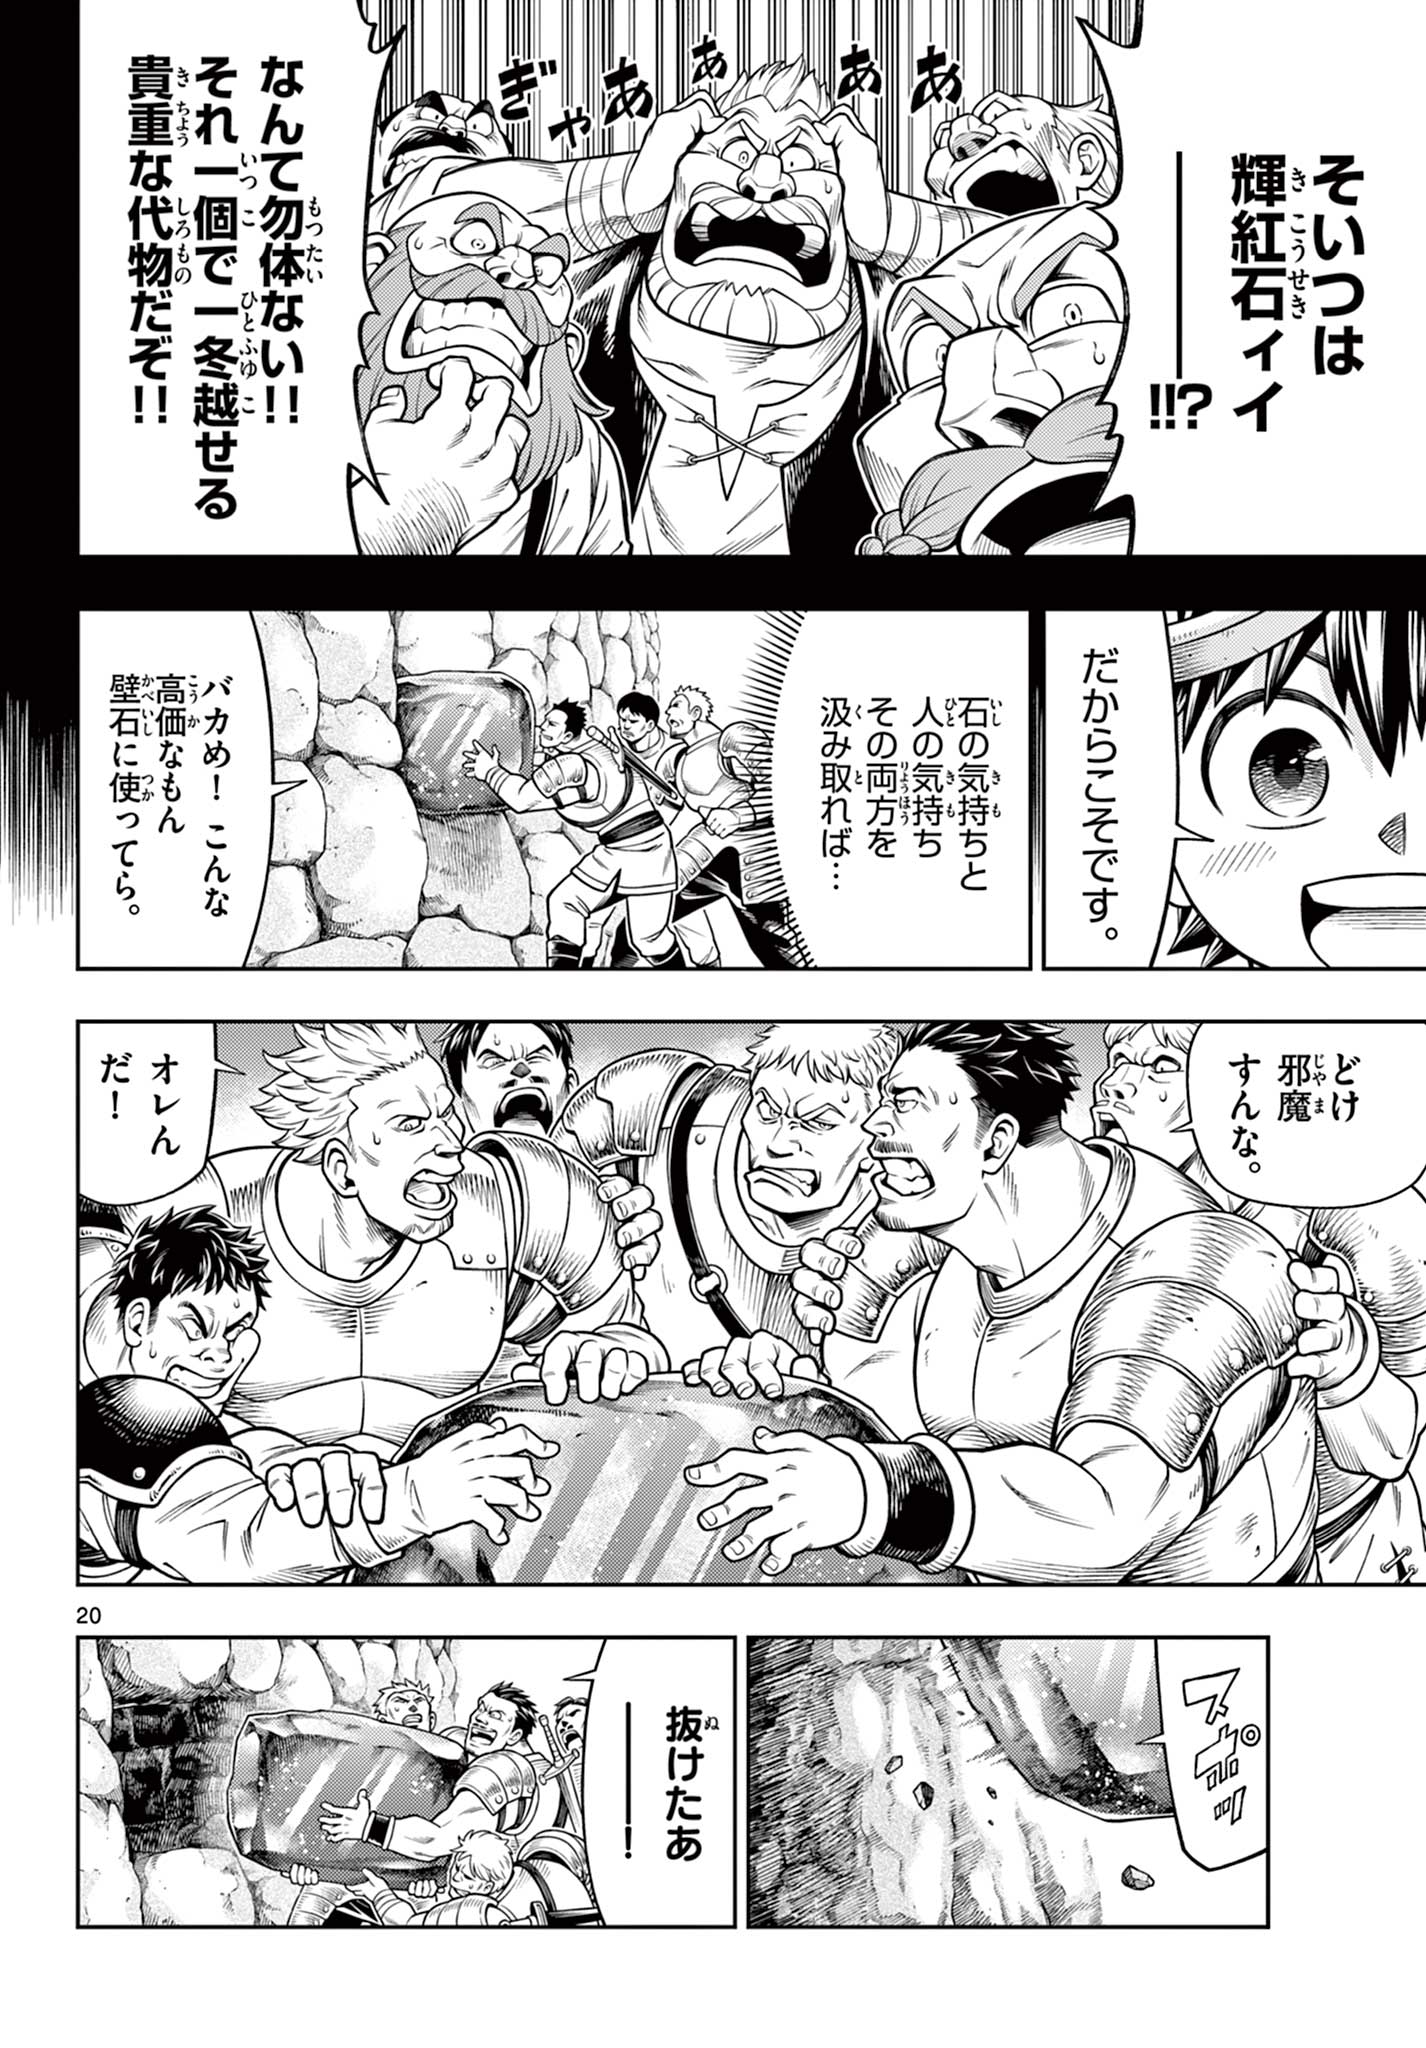 Soara to Mamono no ie - Chapter 27 - Page 20